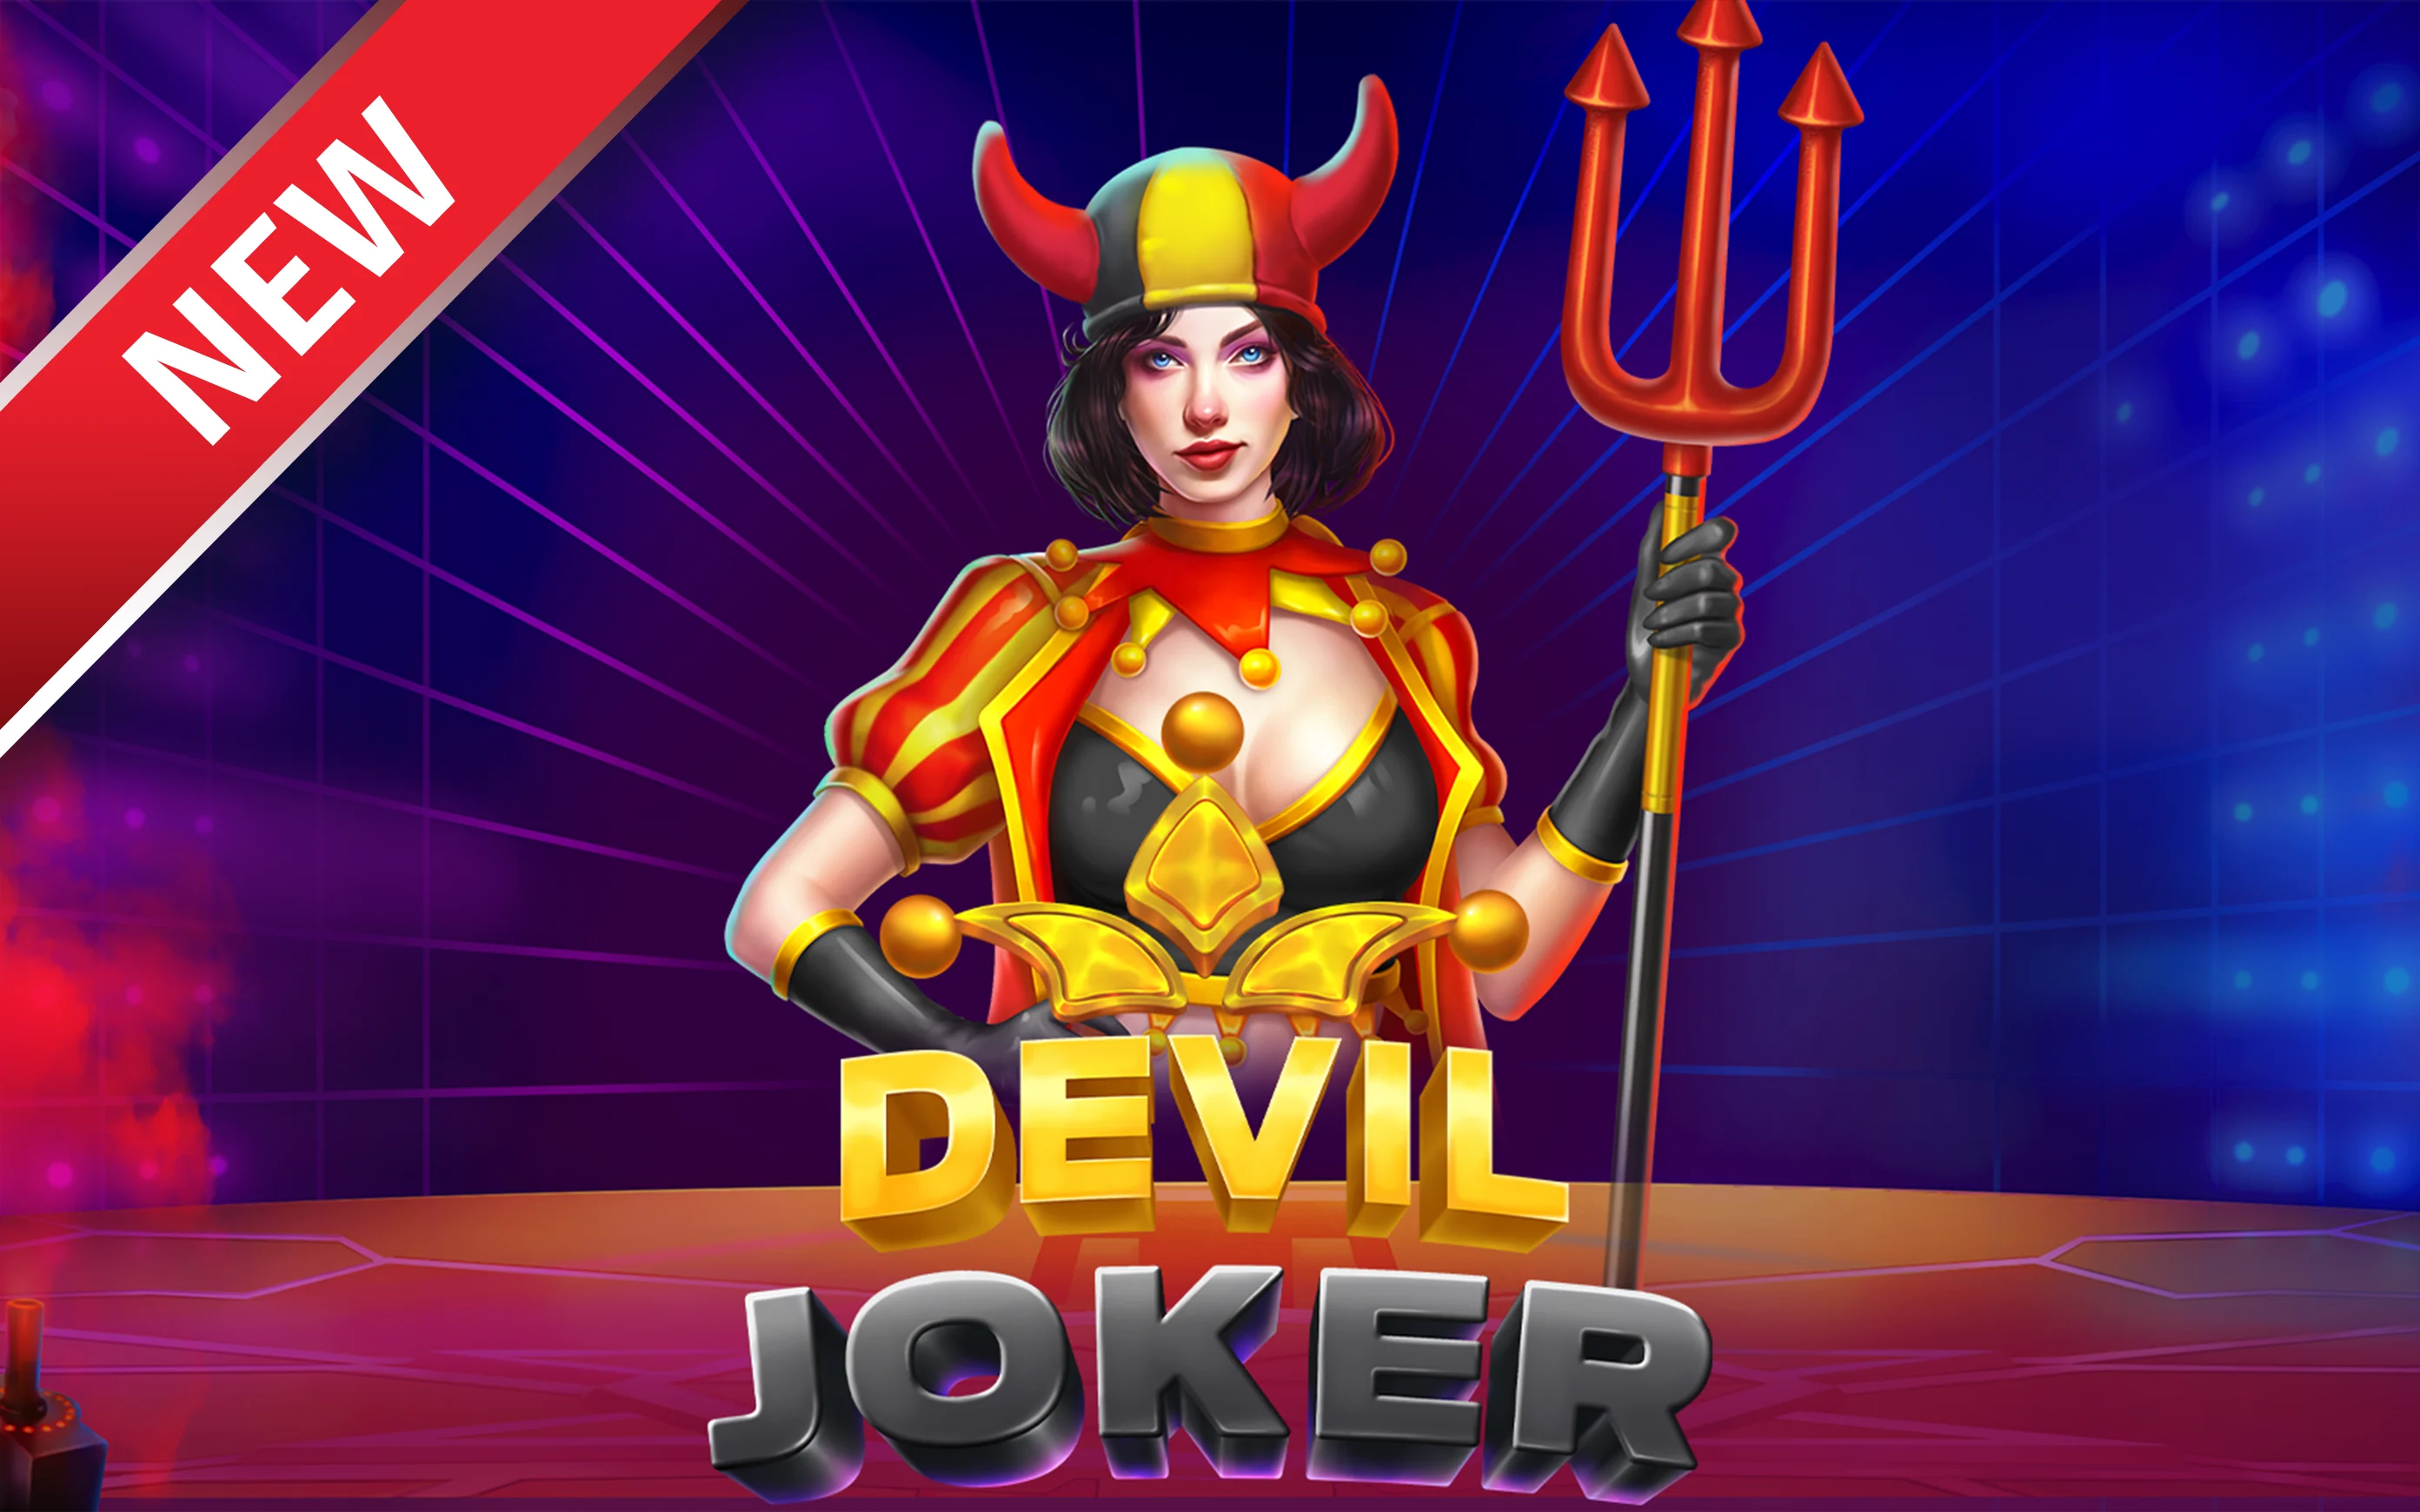 Joacă Red Devil Joker în cazinoul online Starcasino.be